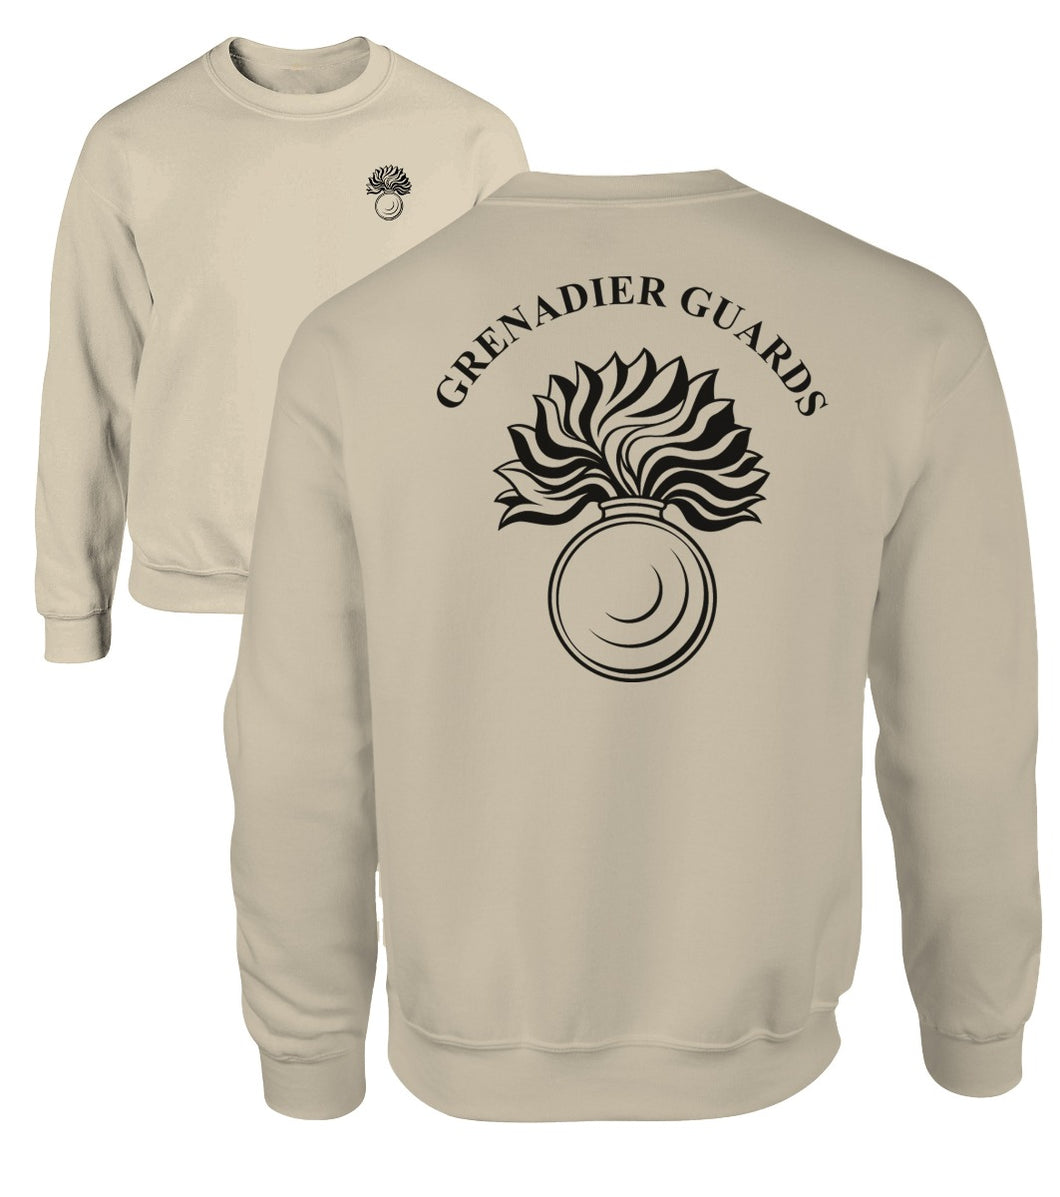 Double Printed Grenadier Guards Sweatshirt